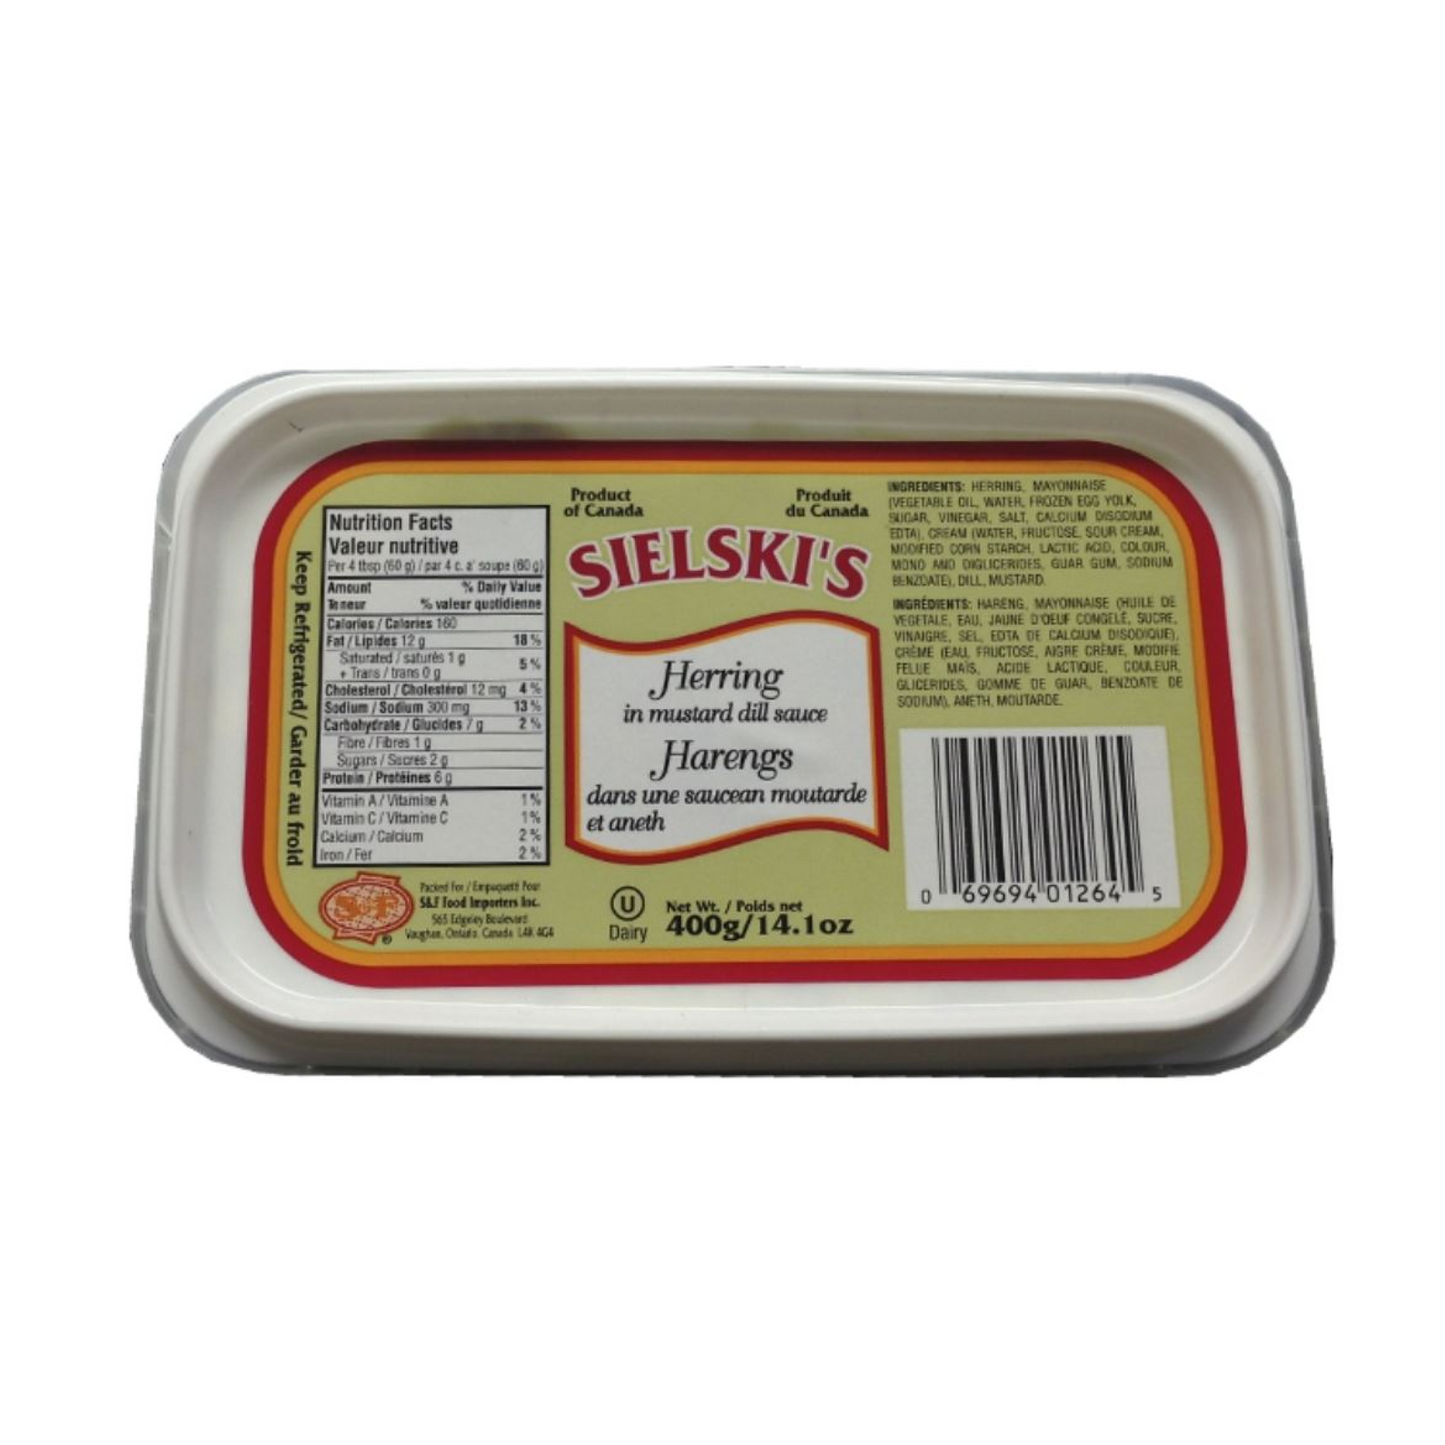 Sielski's Herring Salad in Creamy Dill Sauce 400g